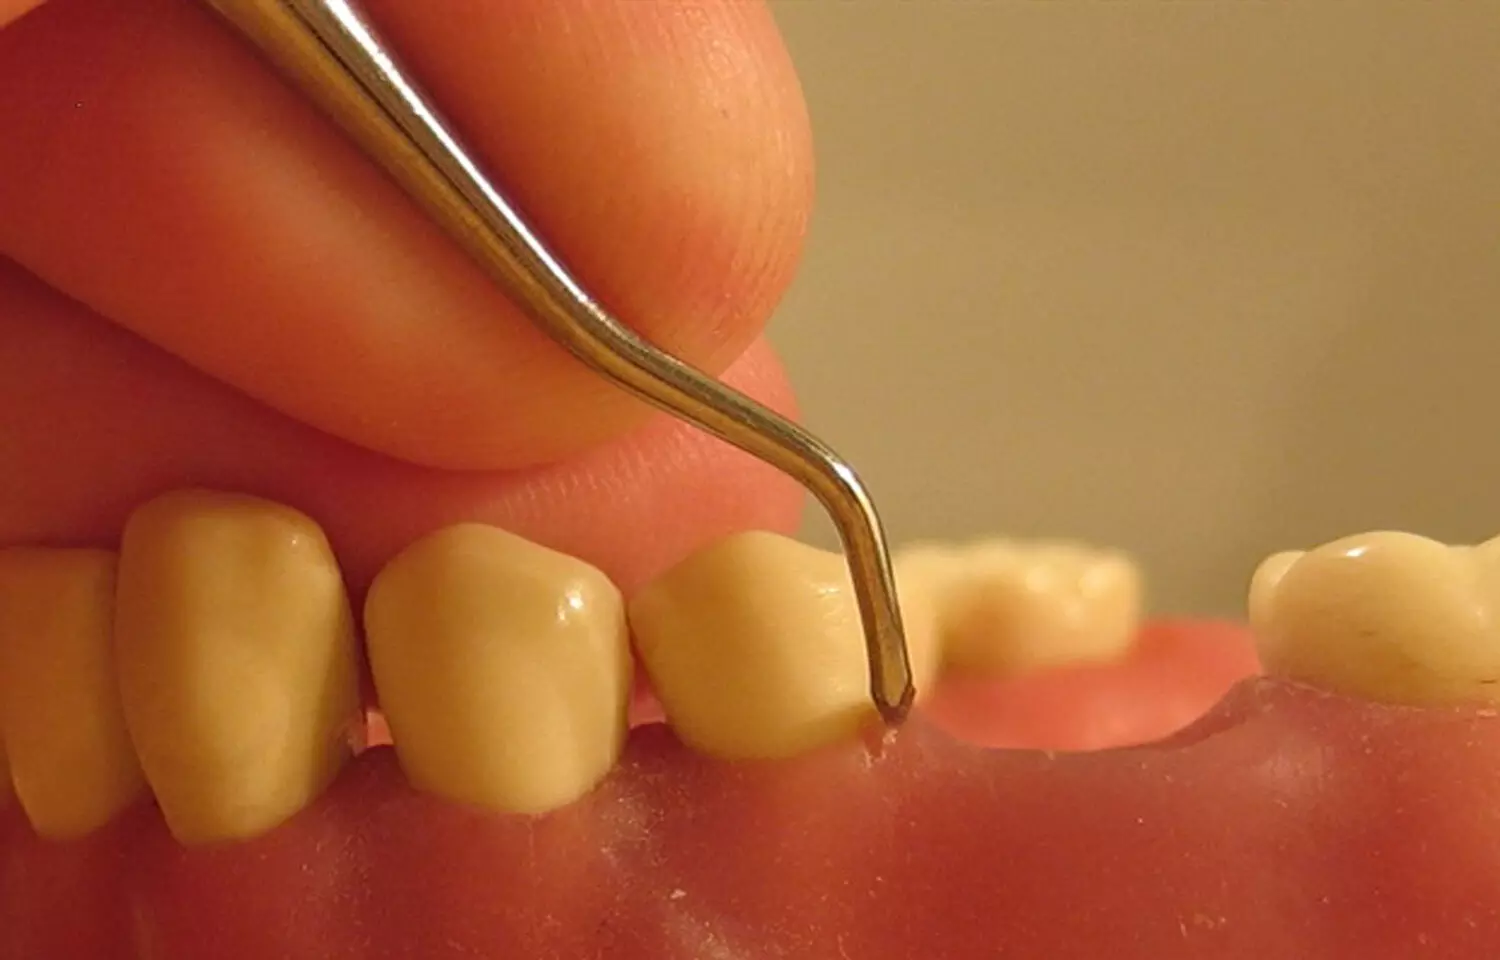 H-NHA composite graft: a promising periodontal regenerative material, reports Study